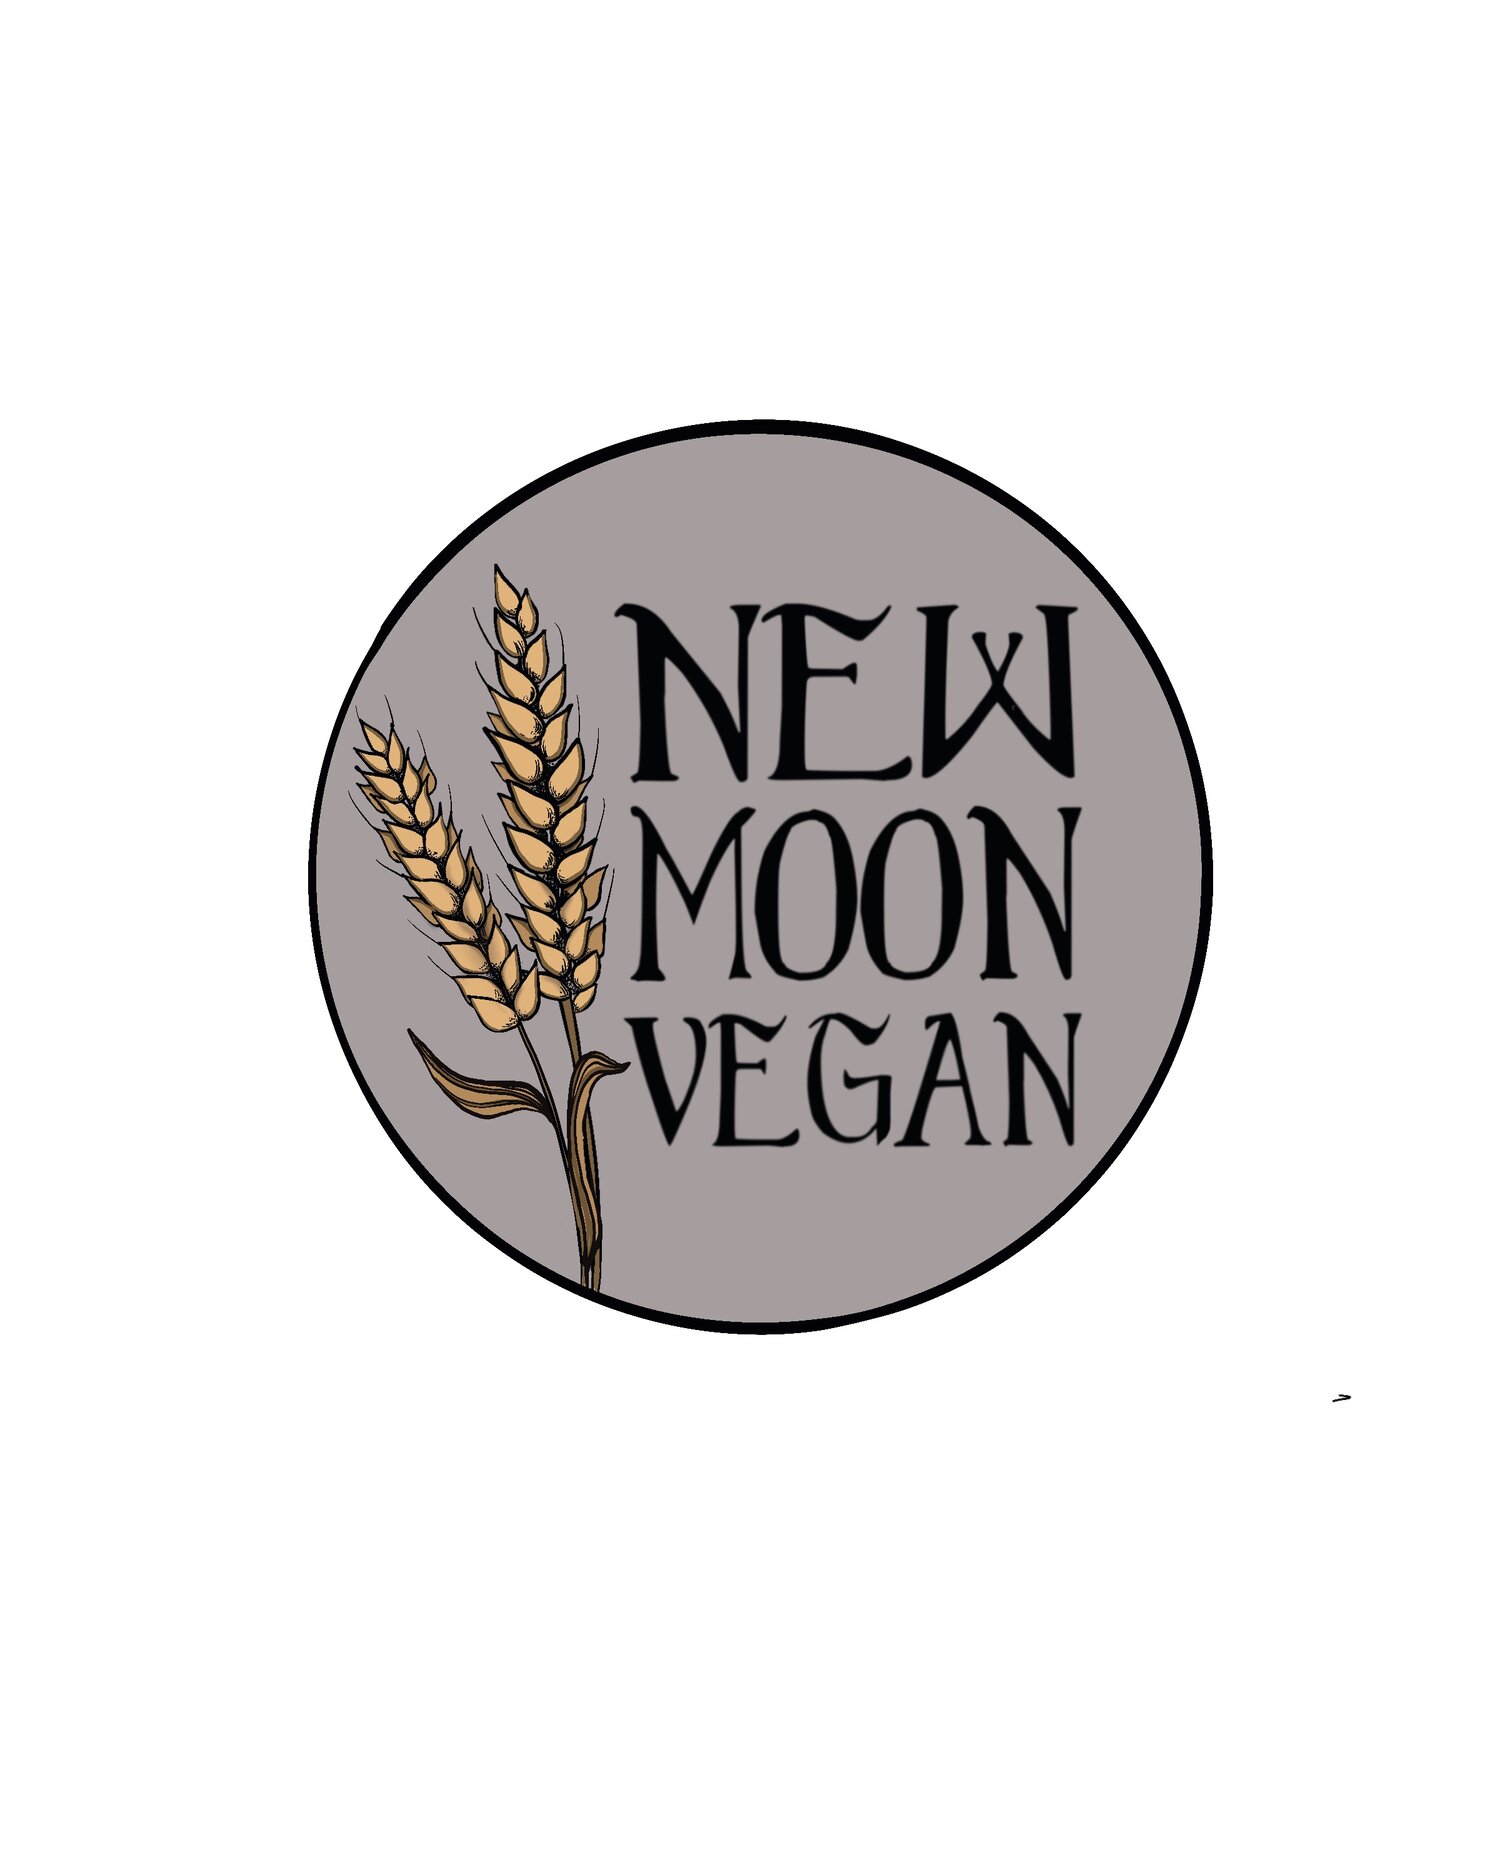 New Moon Vegan